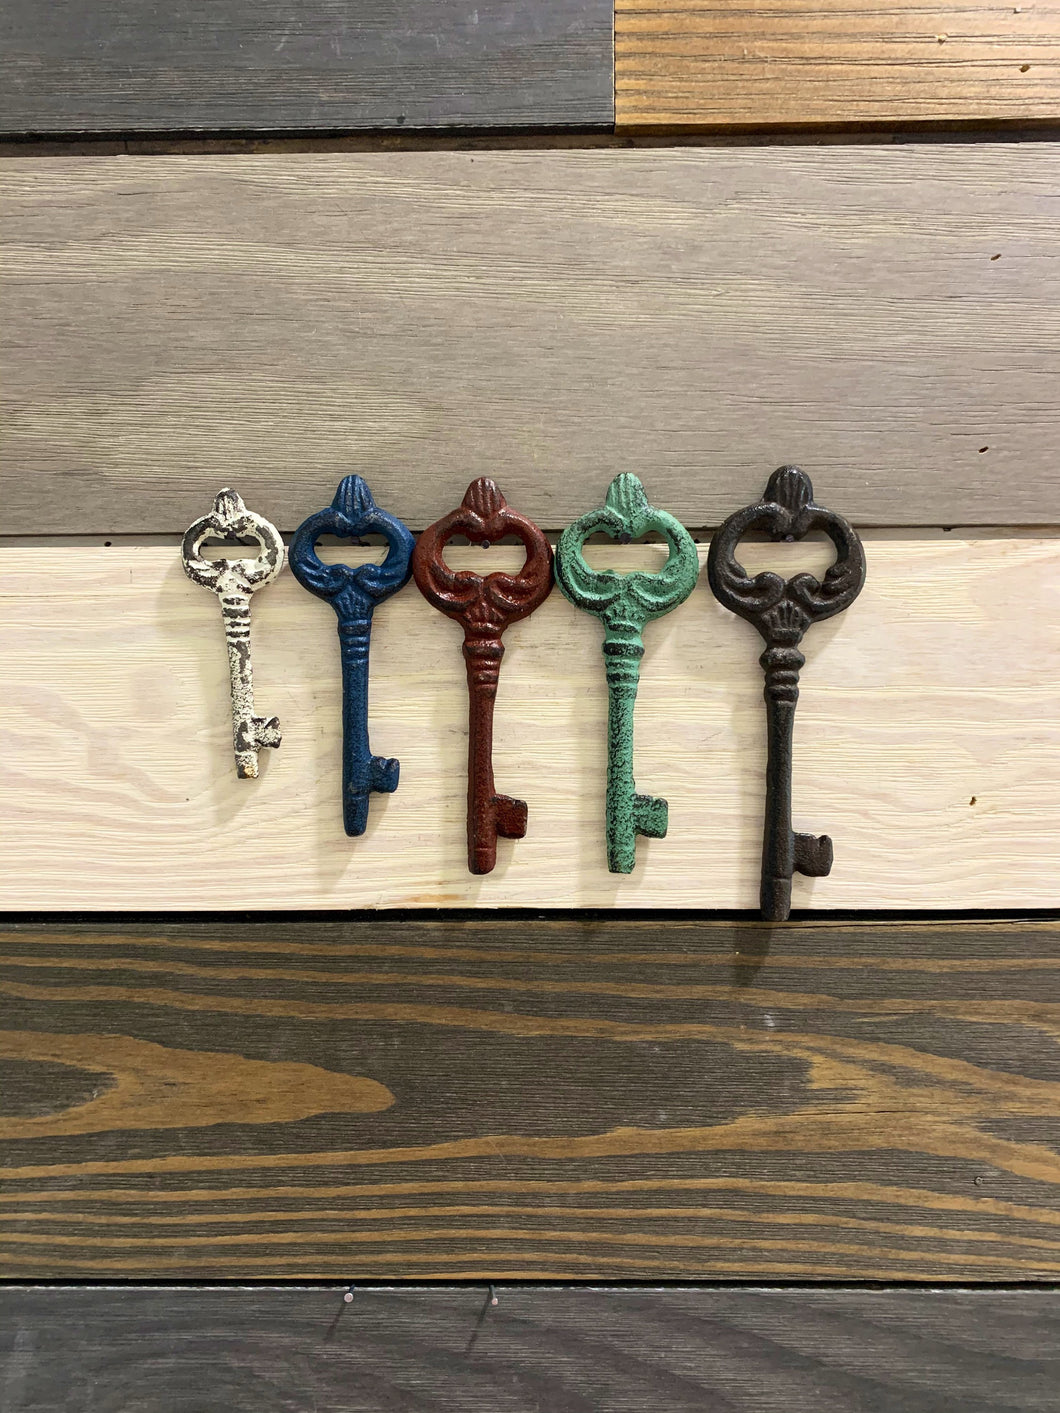 Cast Iron Colorful Key, Rustic Vintage Key, Beautiful Skeleton Key, Ornate Key, Antique Key, Rustic Country Home Decor